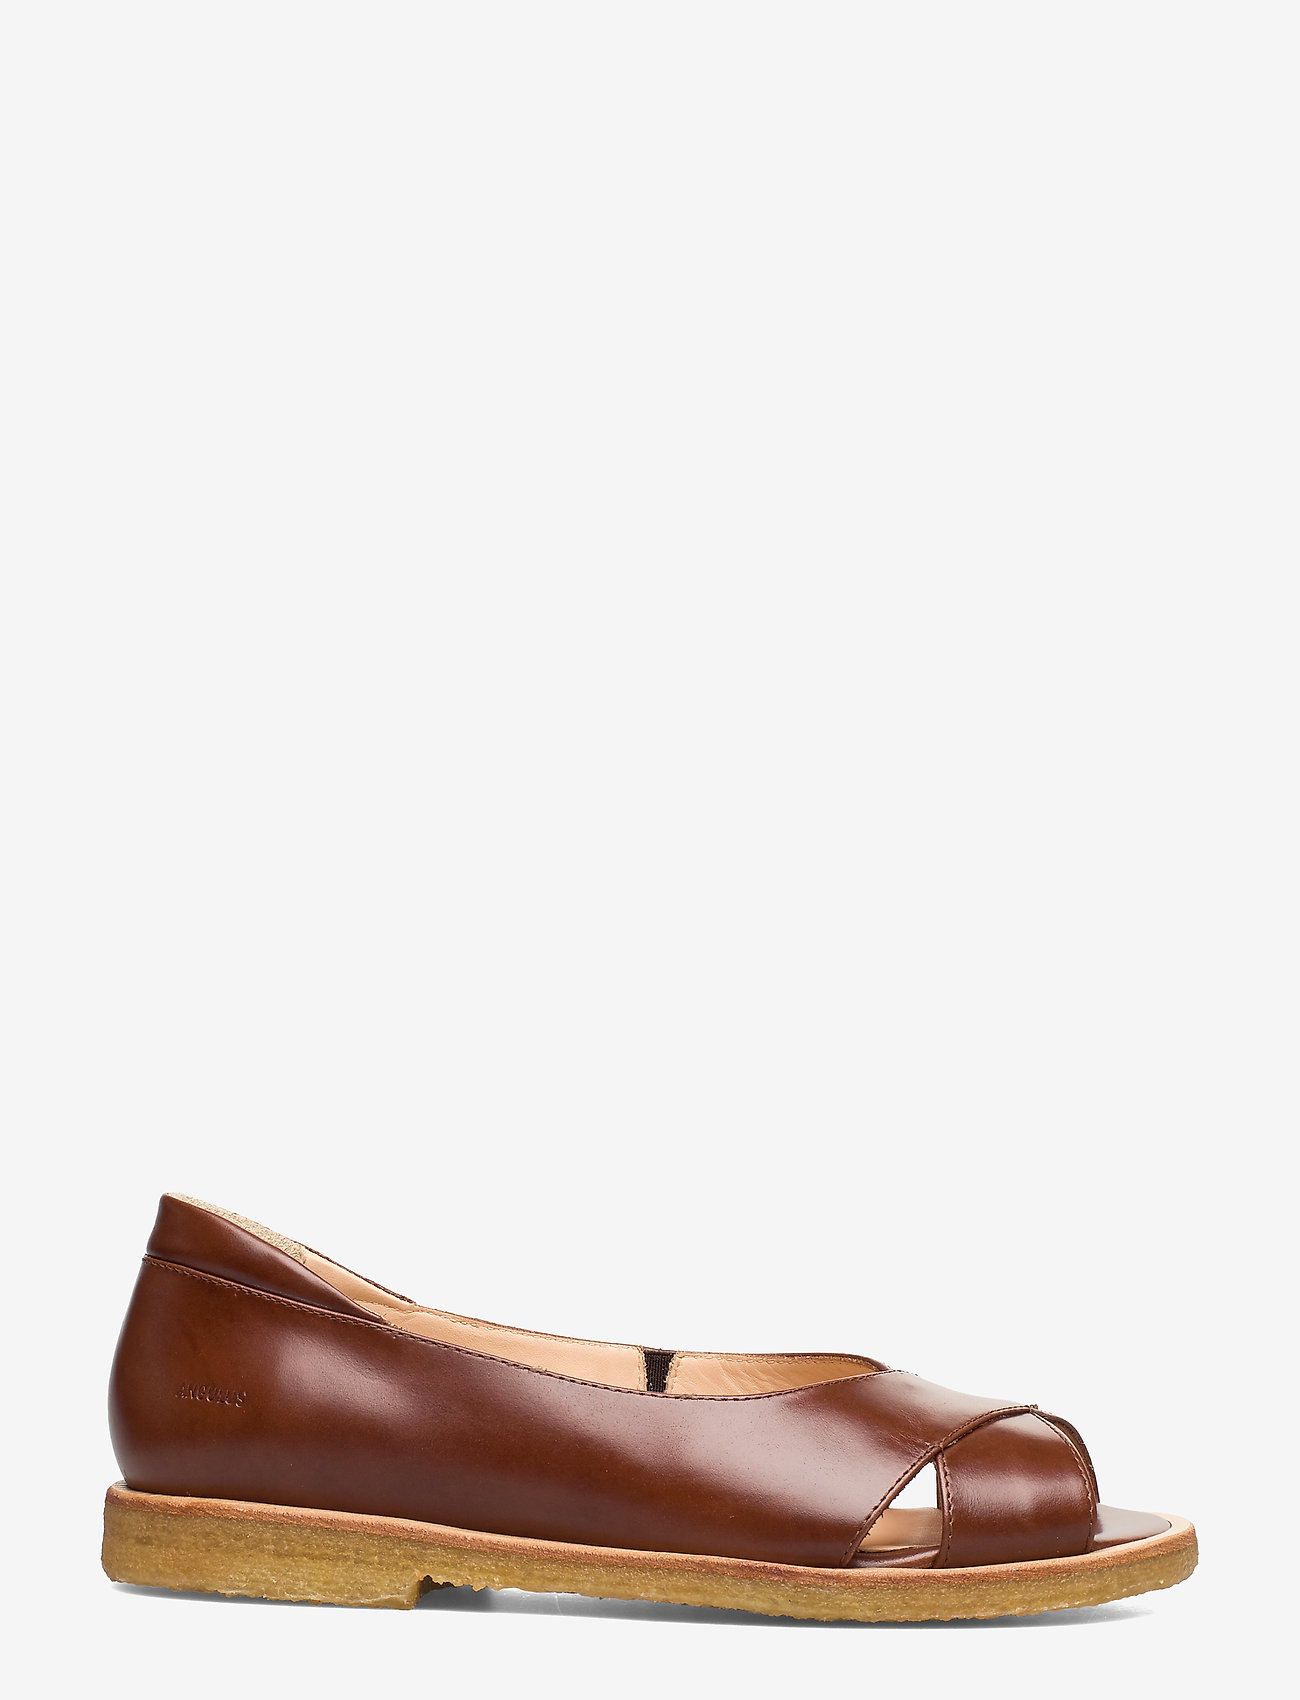 ANGULUS - Sandals - flat - open toe - clo - płaskie sandały - 1837/002 brown/dark brown - 1